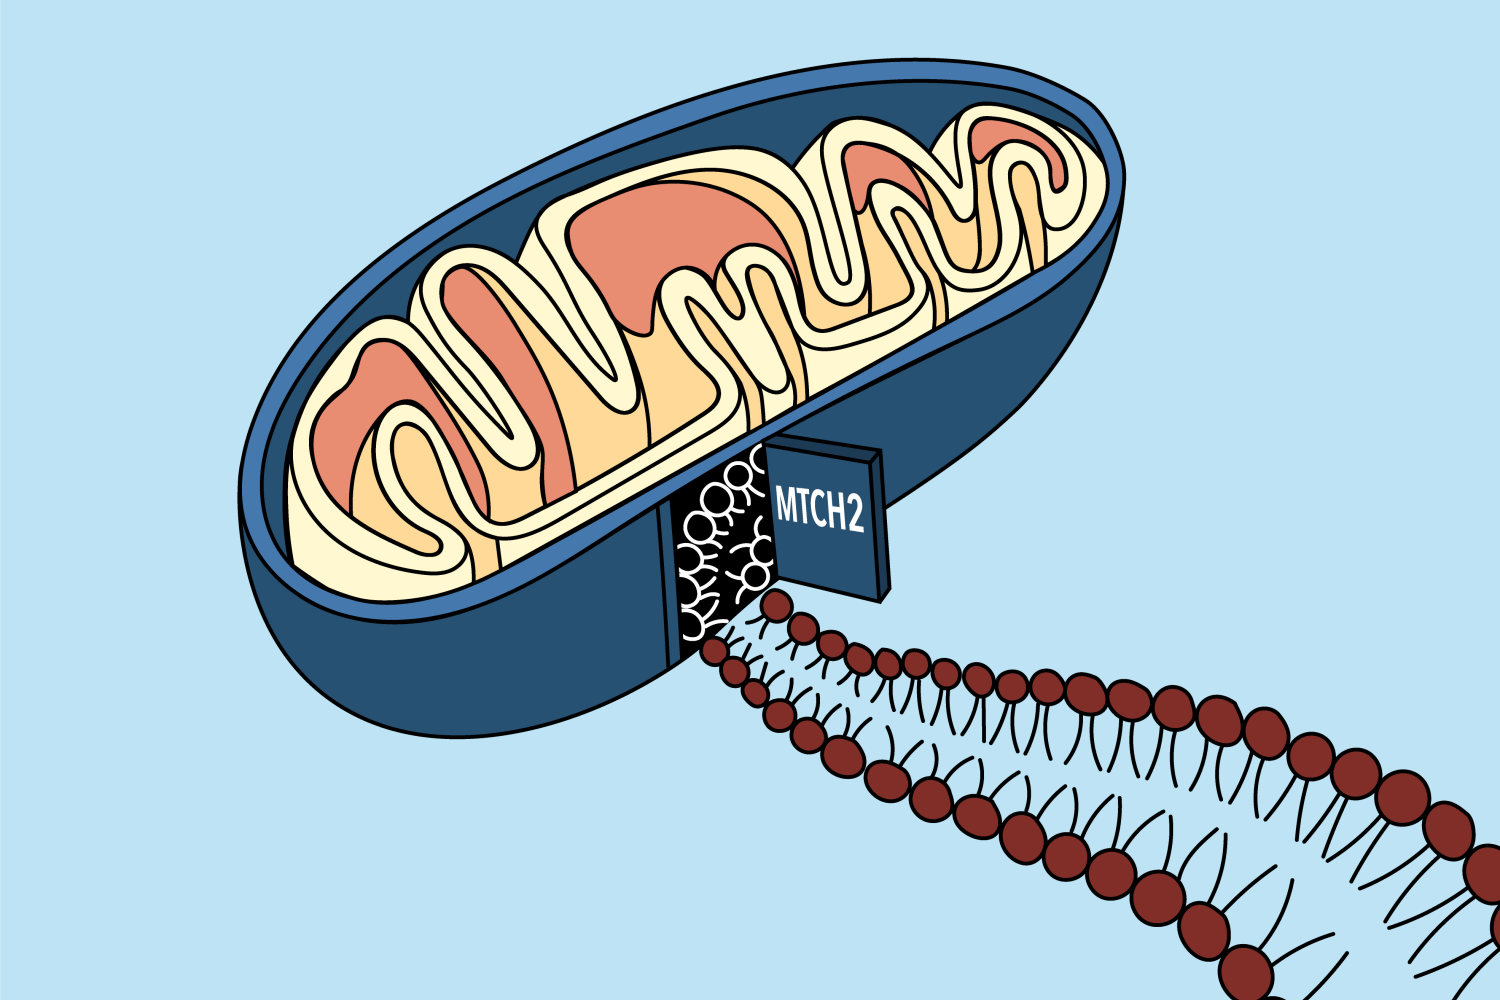 A “door” into the mitochondrial membrane